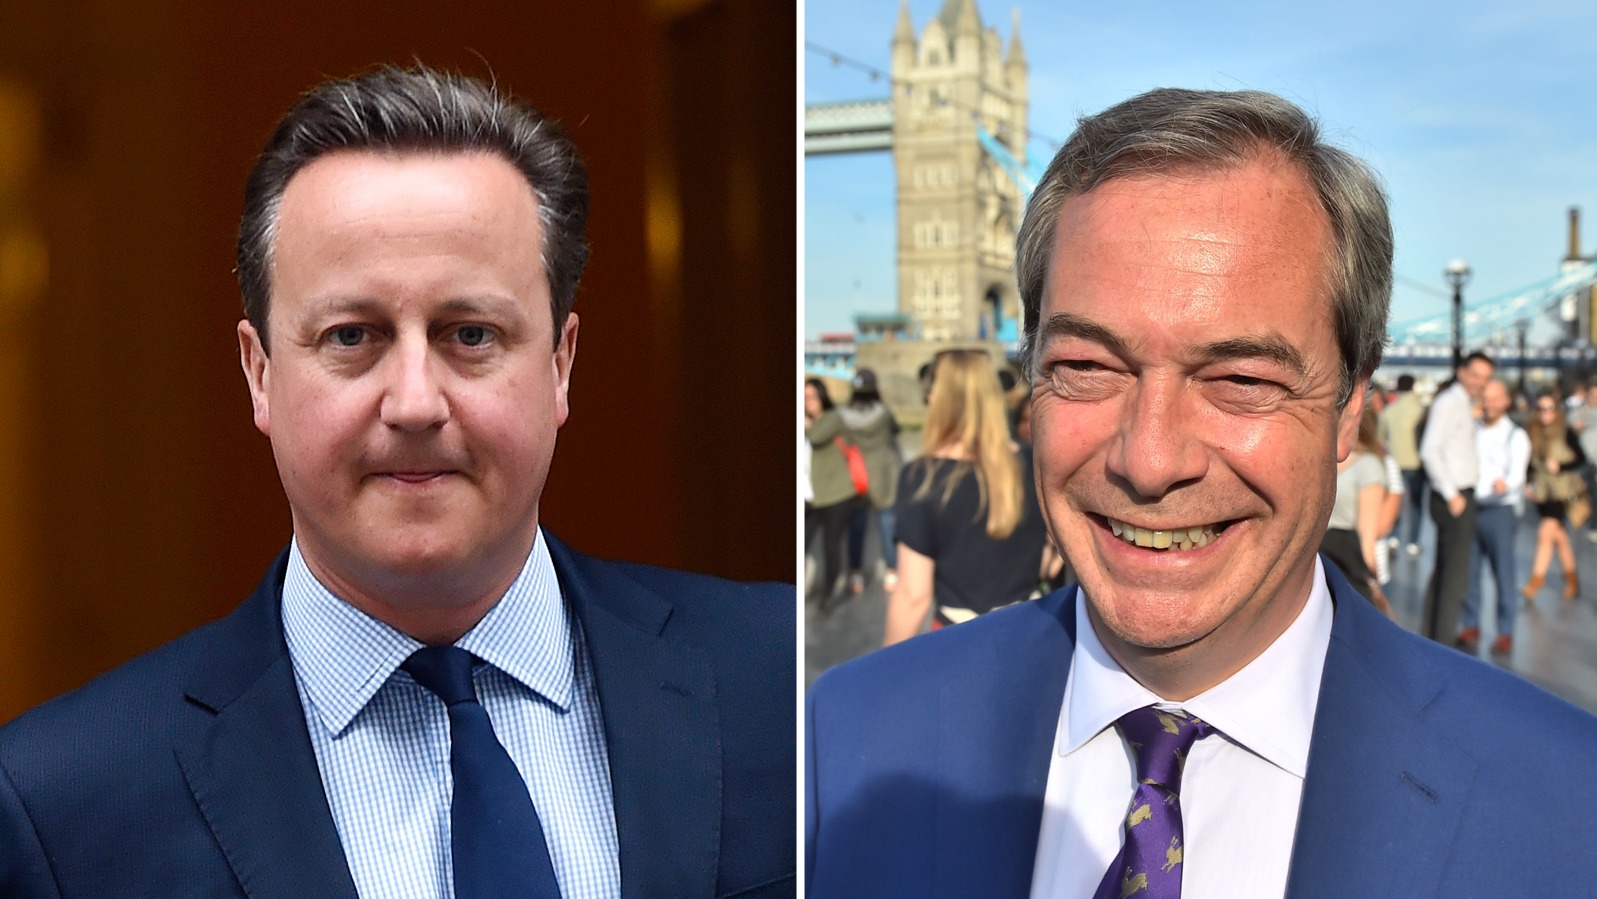 David Cameron And Nigel Farage To Take Part In Live Eu Referendum Event